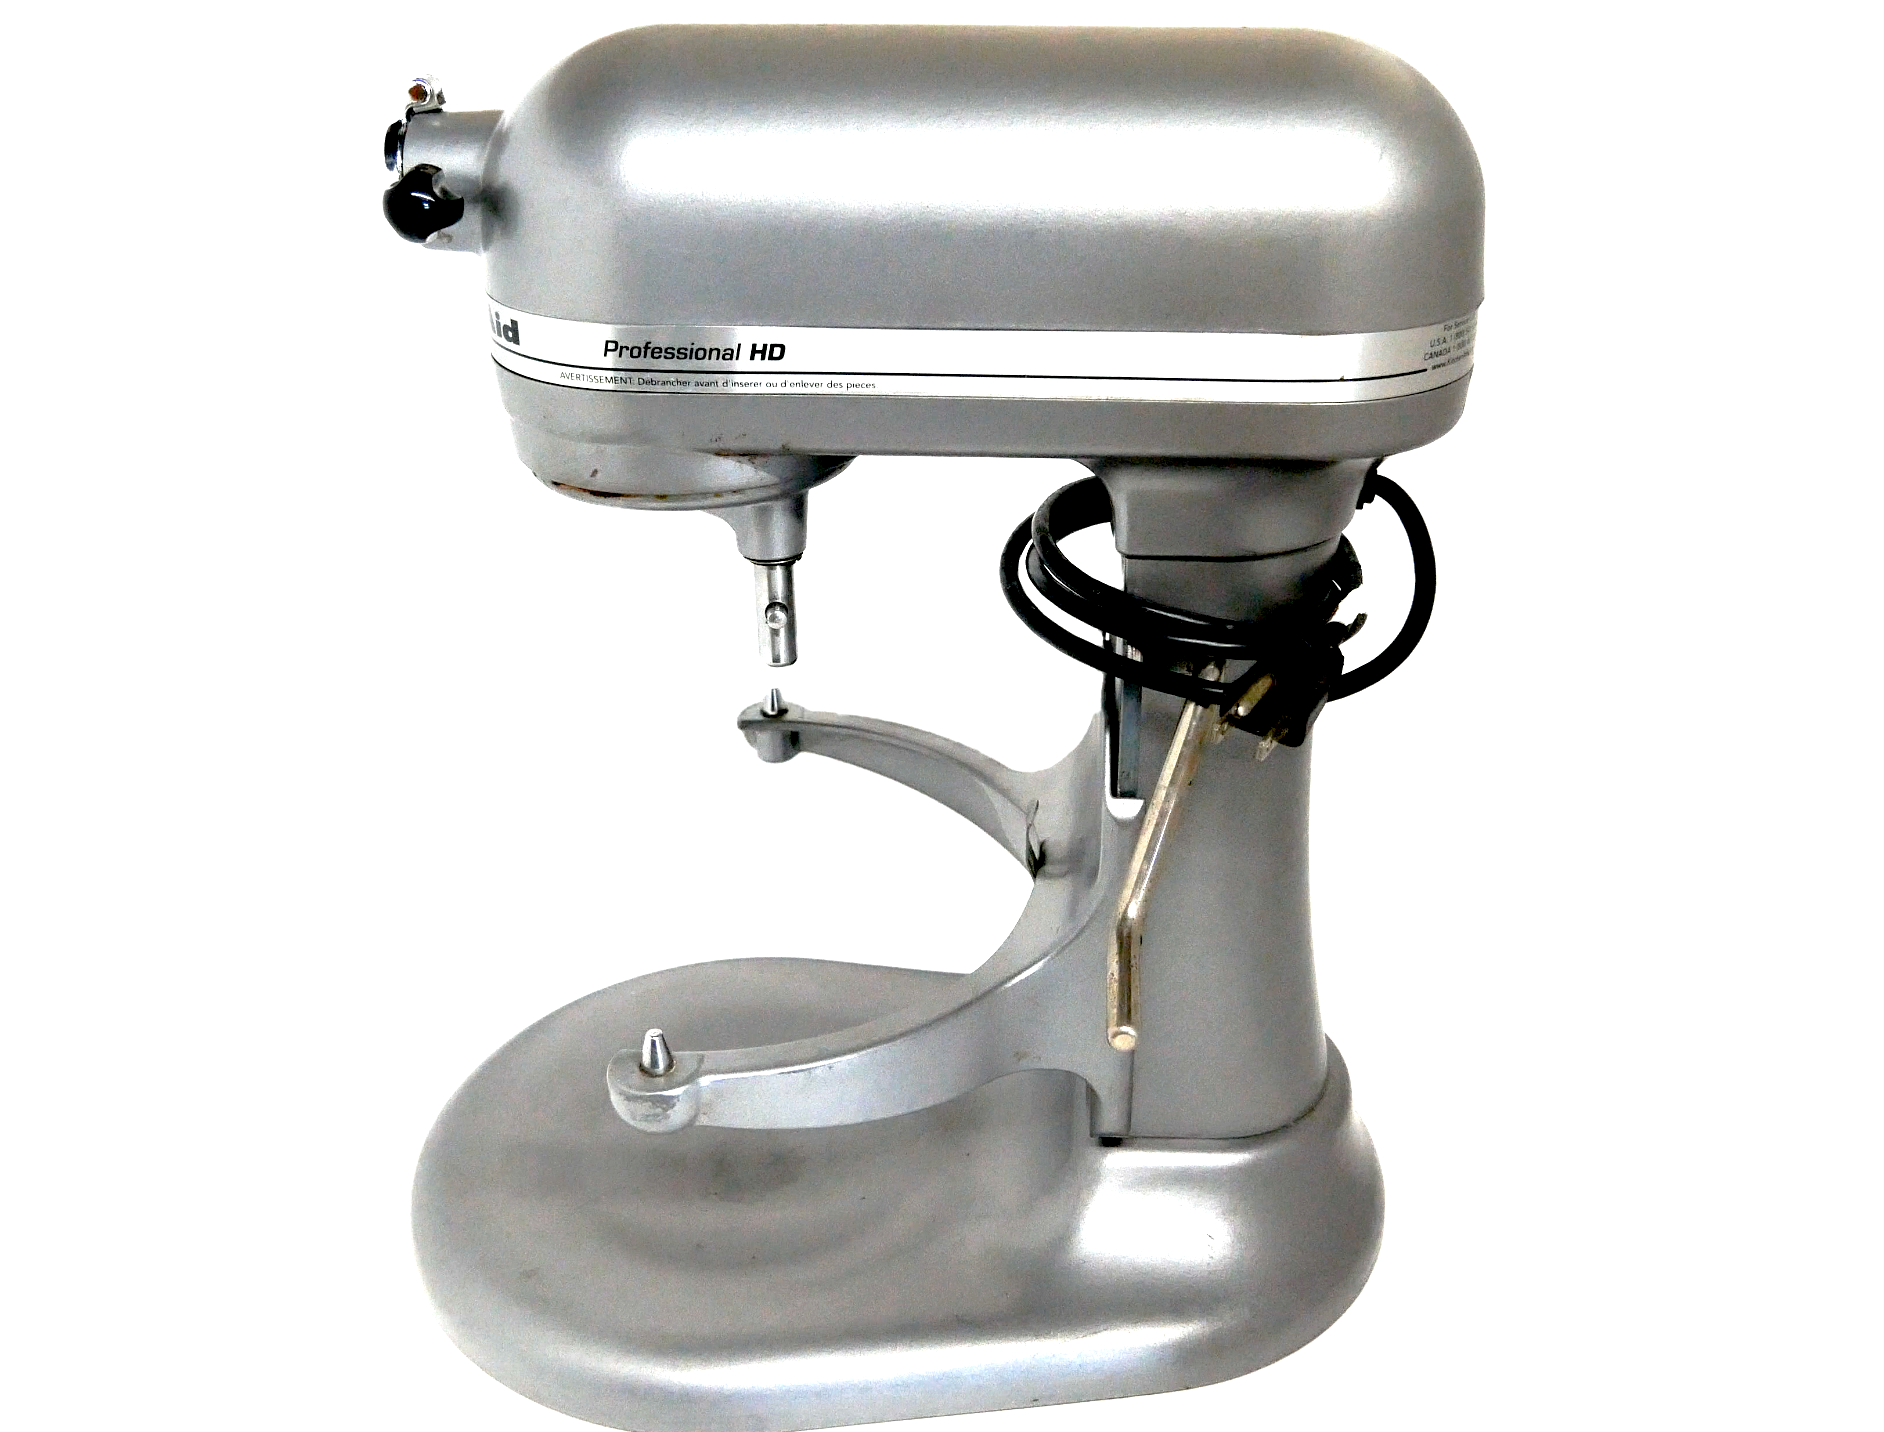 KitchenAid Professional 550 Plus-5.5 Quart Bowl-Lift Stand Mixer